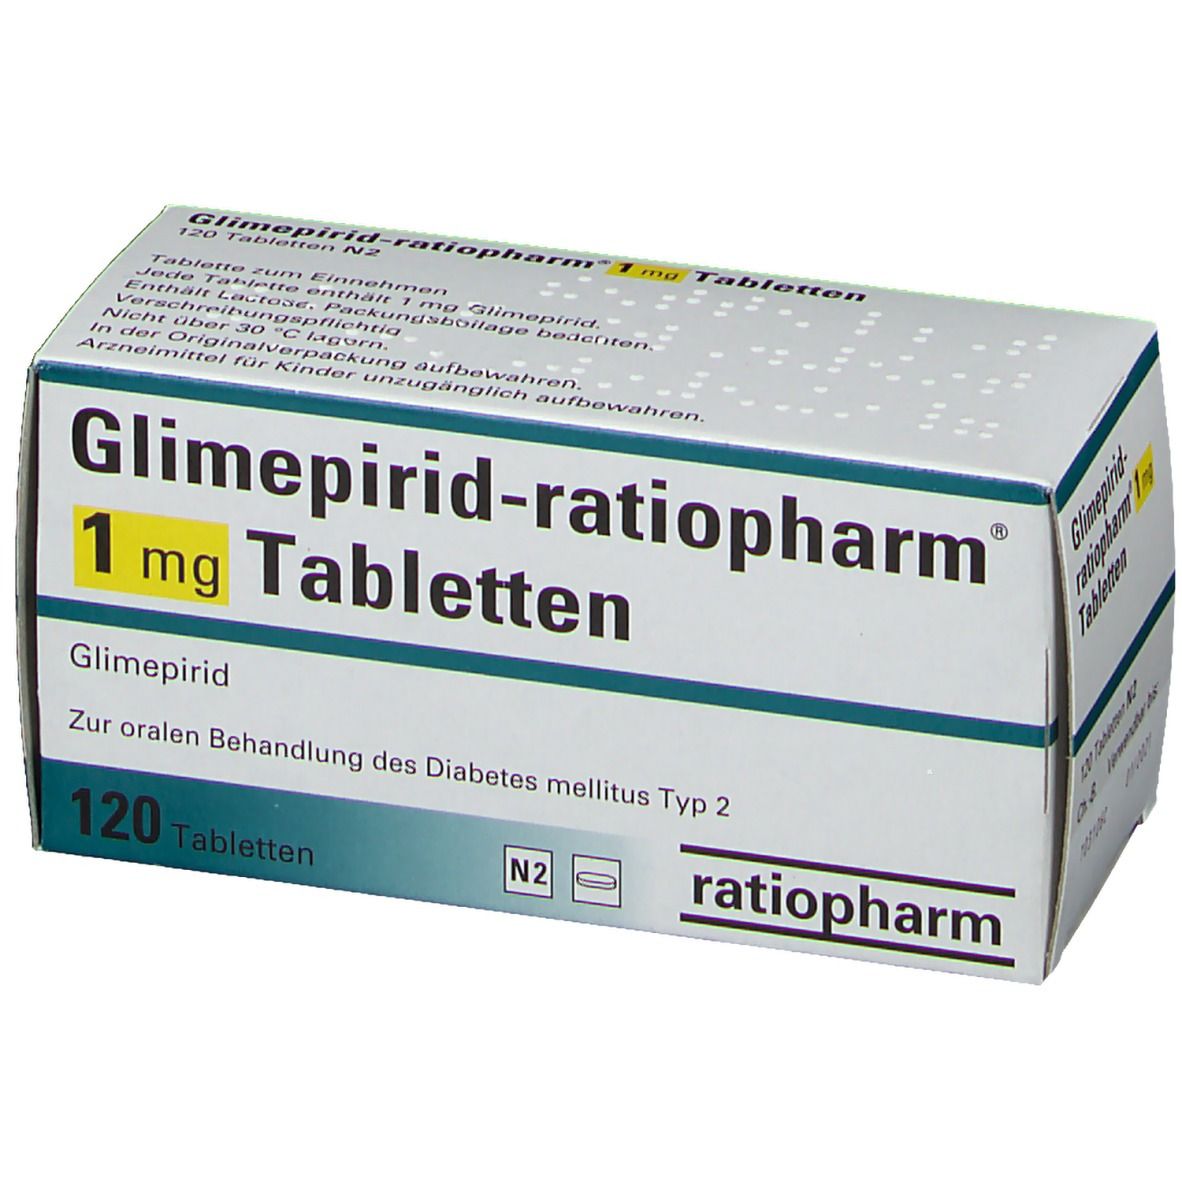 Glimepirid-ratiopharm® 1 mg